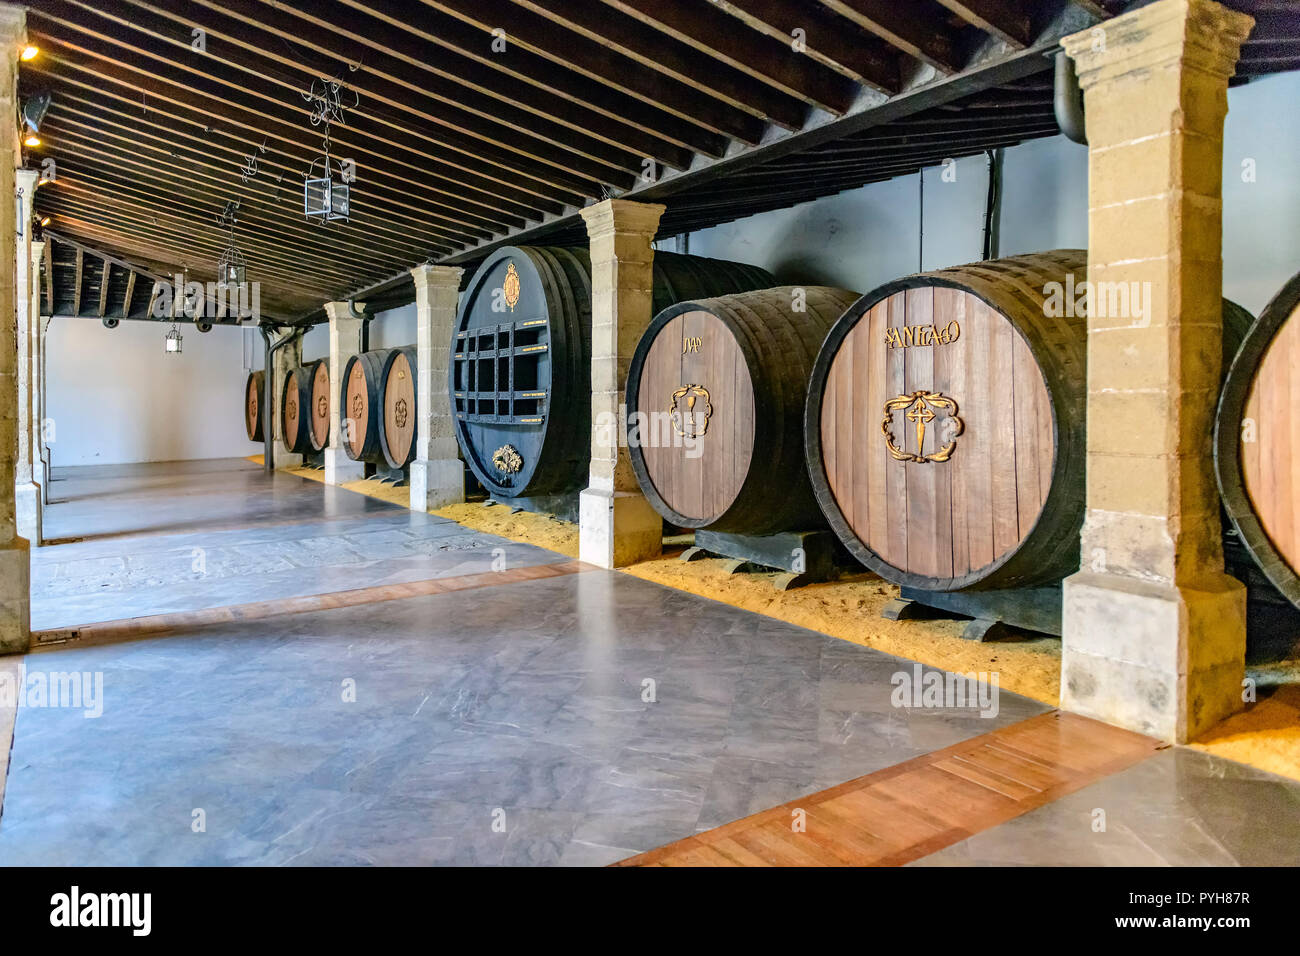 Giant wine barrel -Fotos und -Bildmaterial in hoher Auflösung – Alamy